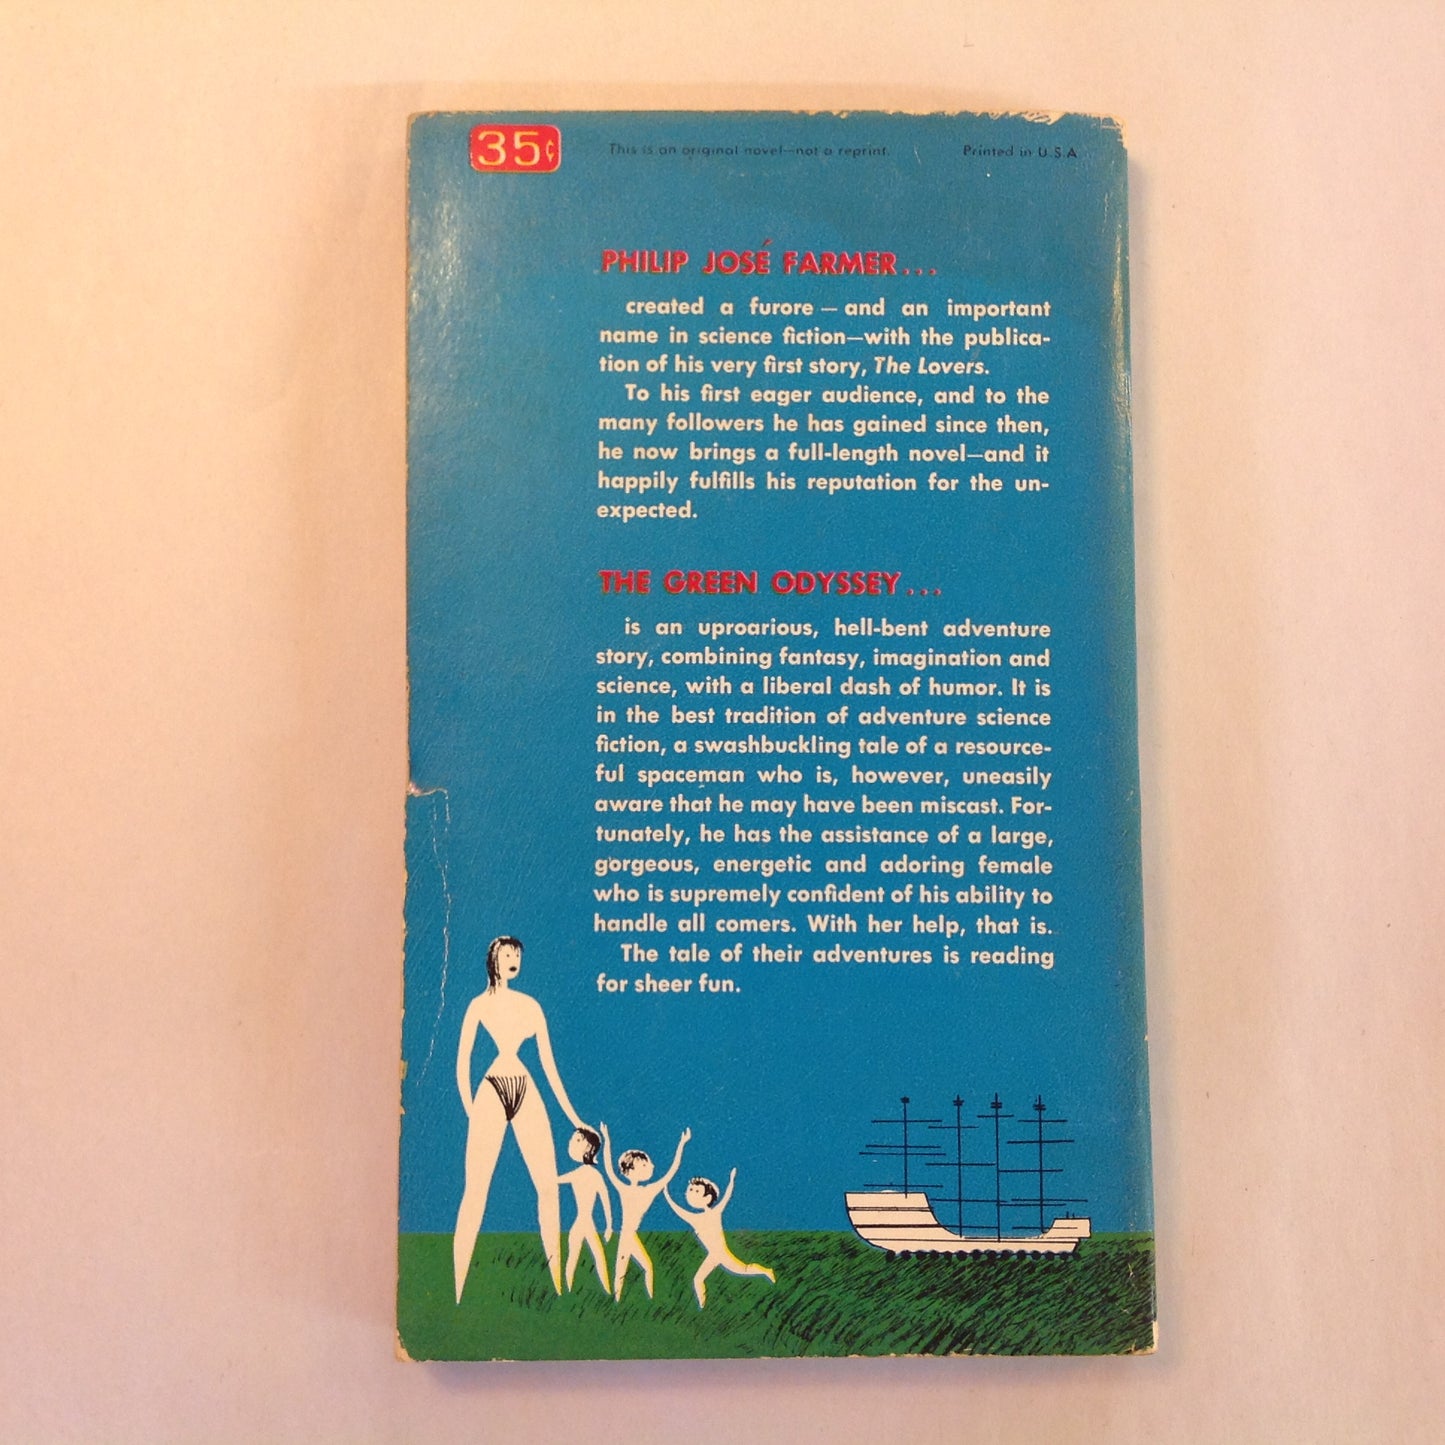 Vintage 1957 Mass Market Paperback The Green Odyssey Philip Jose Farmer First Ballantine